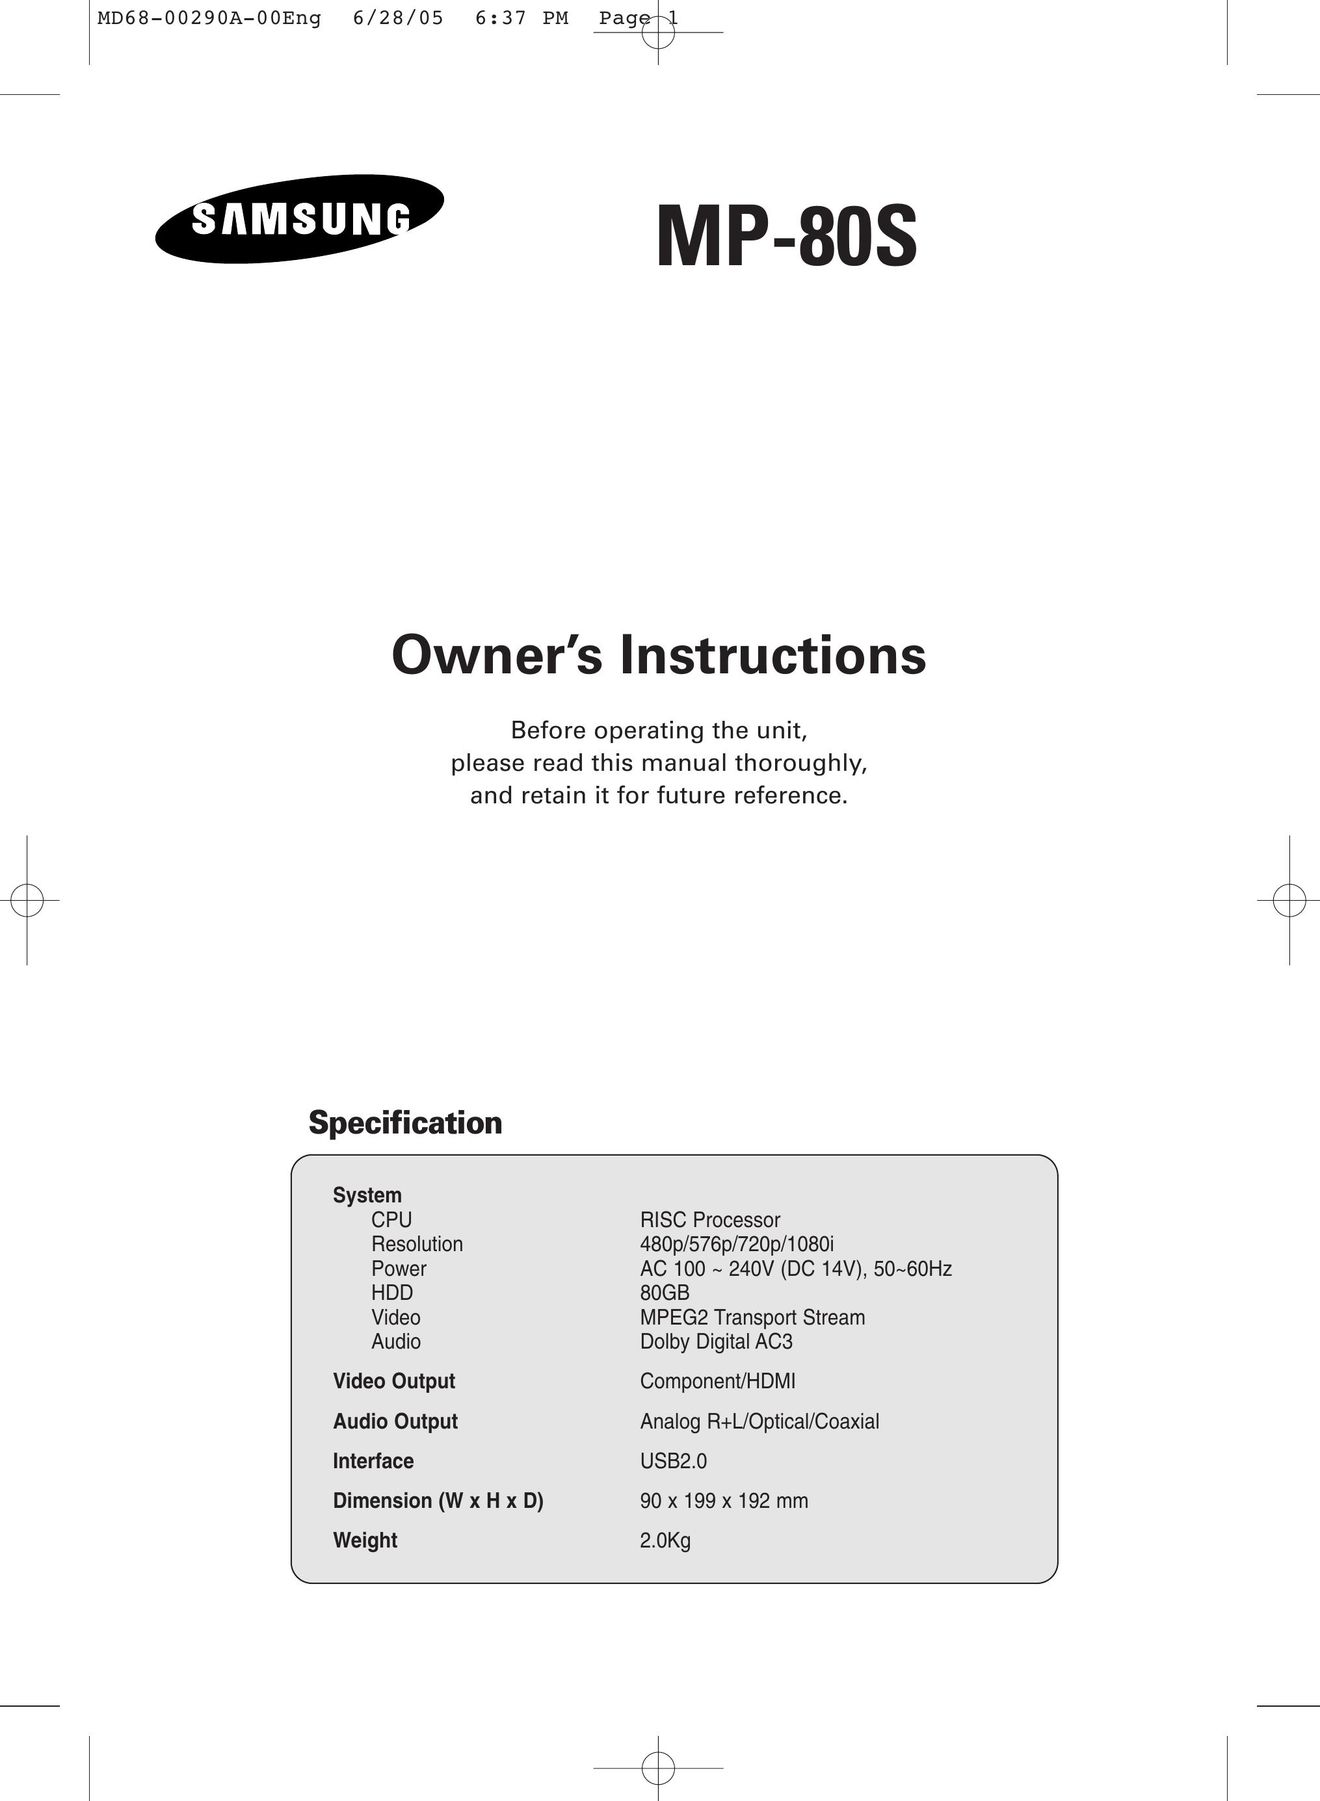 Samsung MP-80S Network Card User Manual